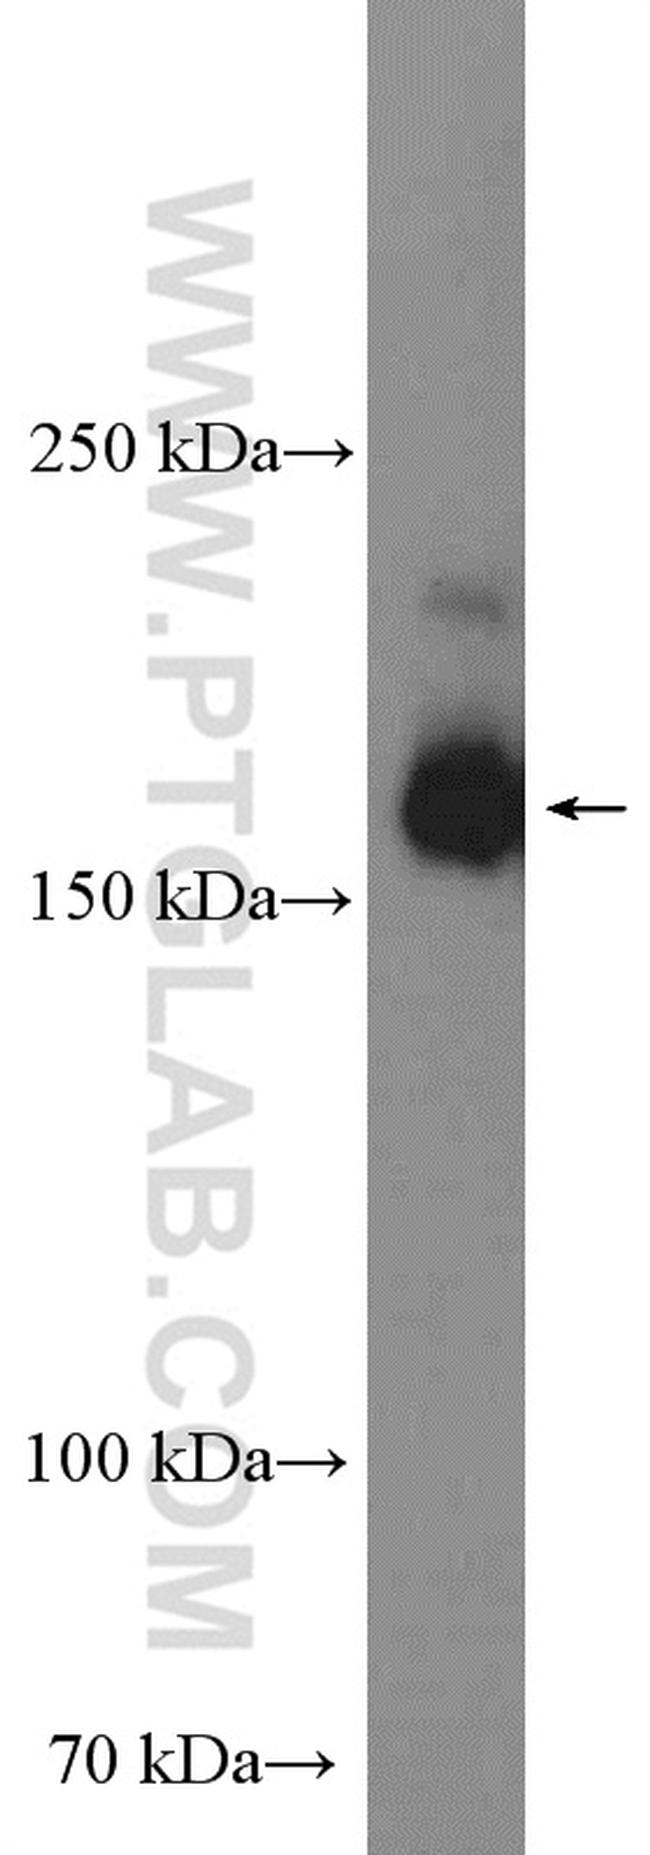 IQGAP1 Antibody in Western Blot (WB)